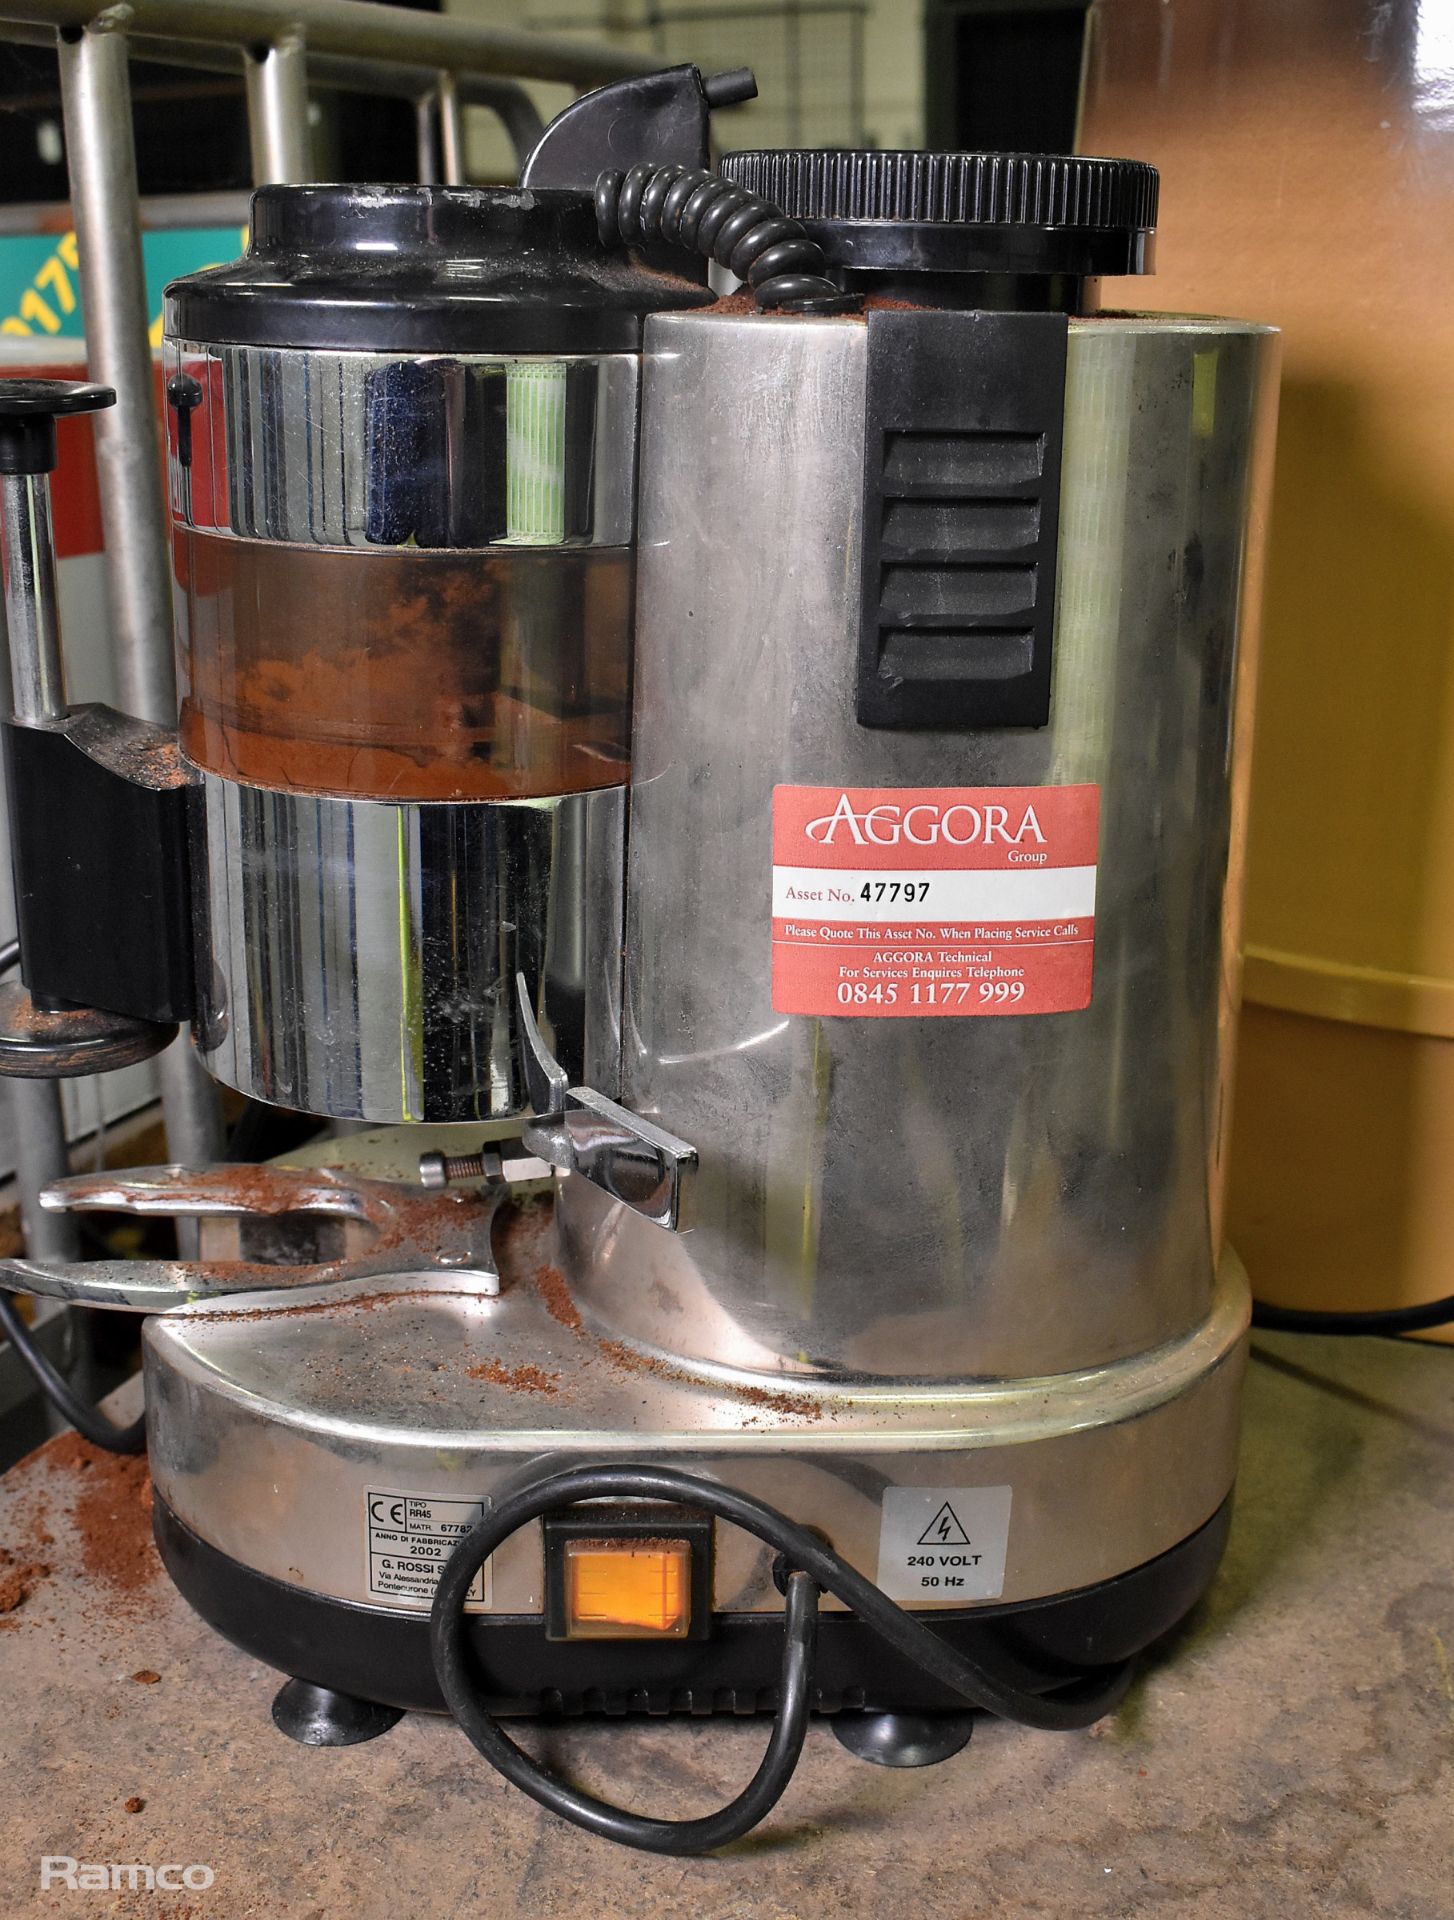 Brasilia RR45 coffee grinder - no hopper attached, Argo 125 coffee maker/dispenser - Image 4 of 9